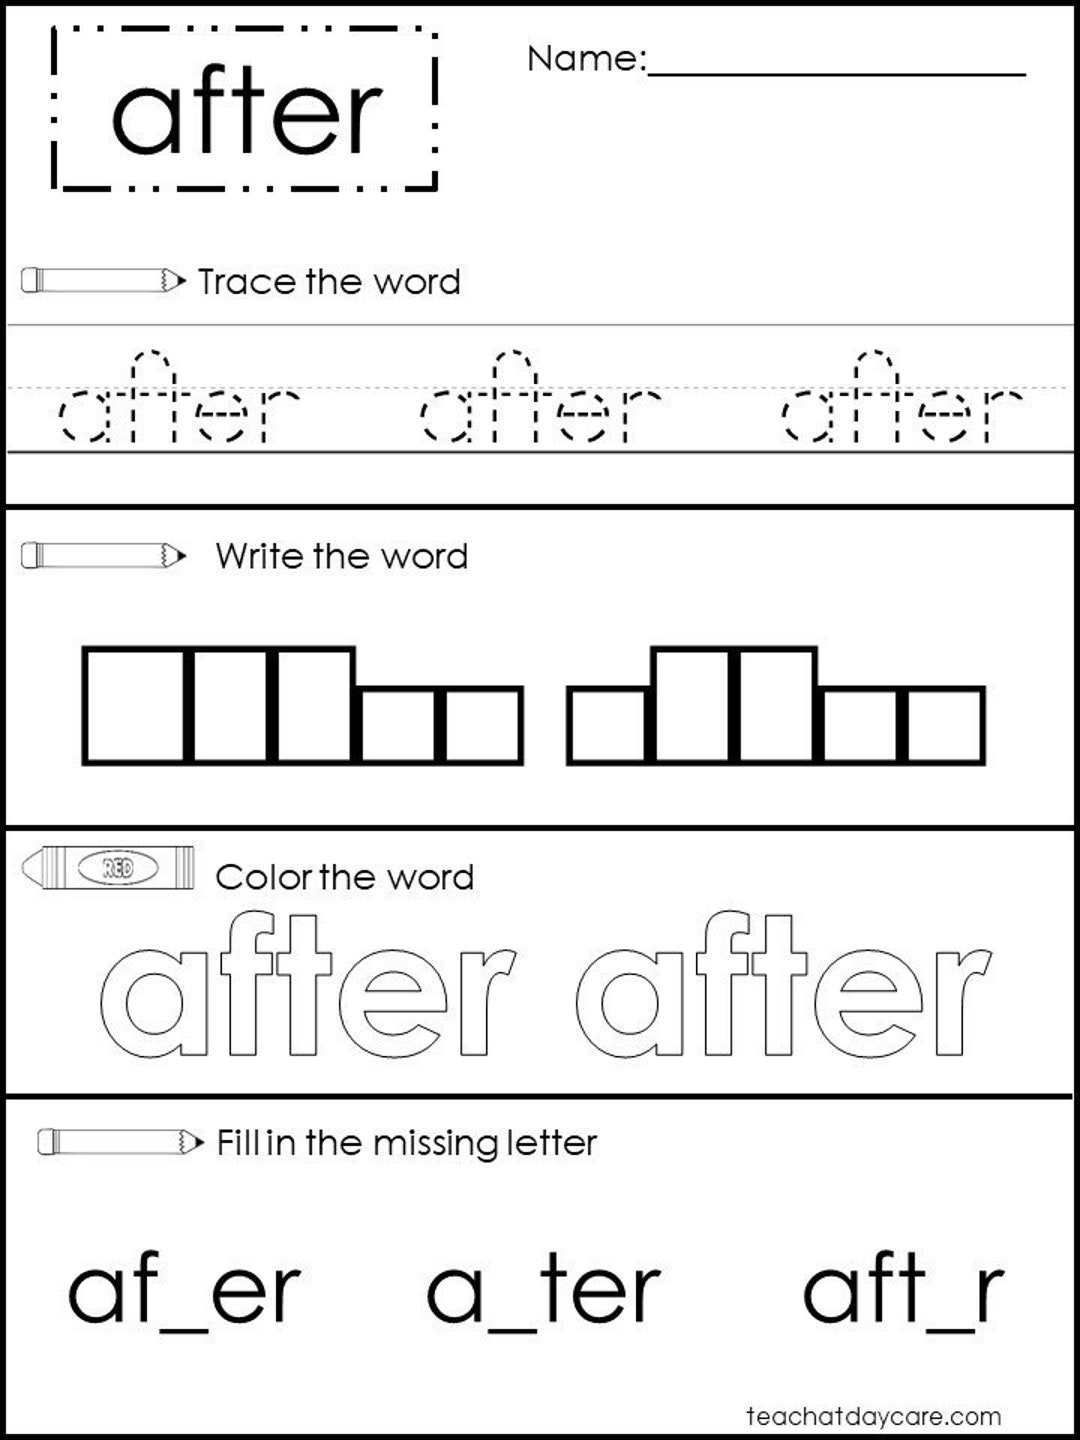 41-printable-dolch-1st-grade-word-work-worksheets-1st-grade